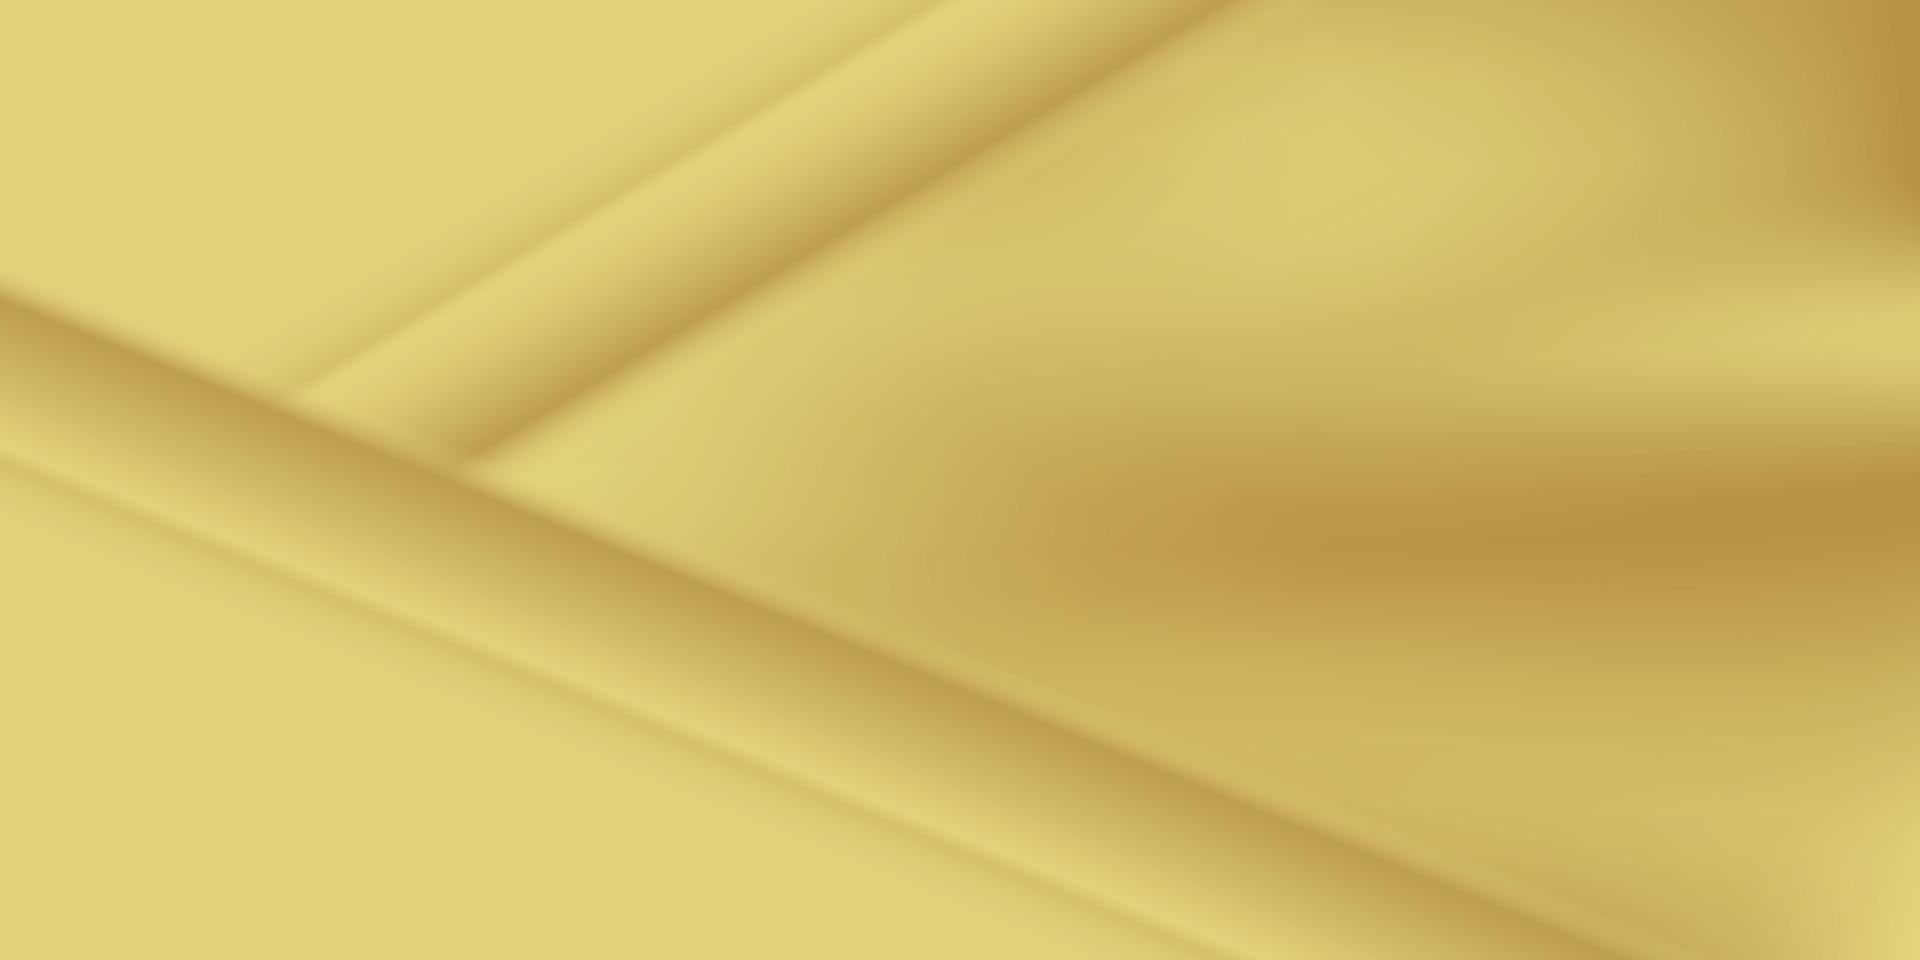 Fondo degradado abstracto dorado. ilustración vectorial. vector